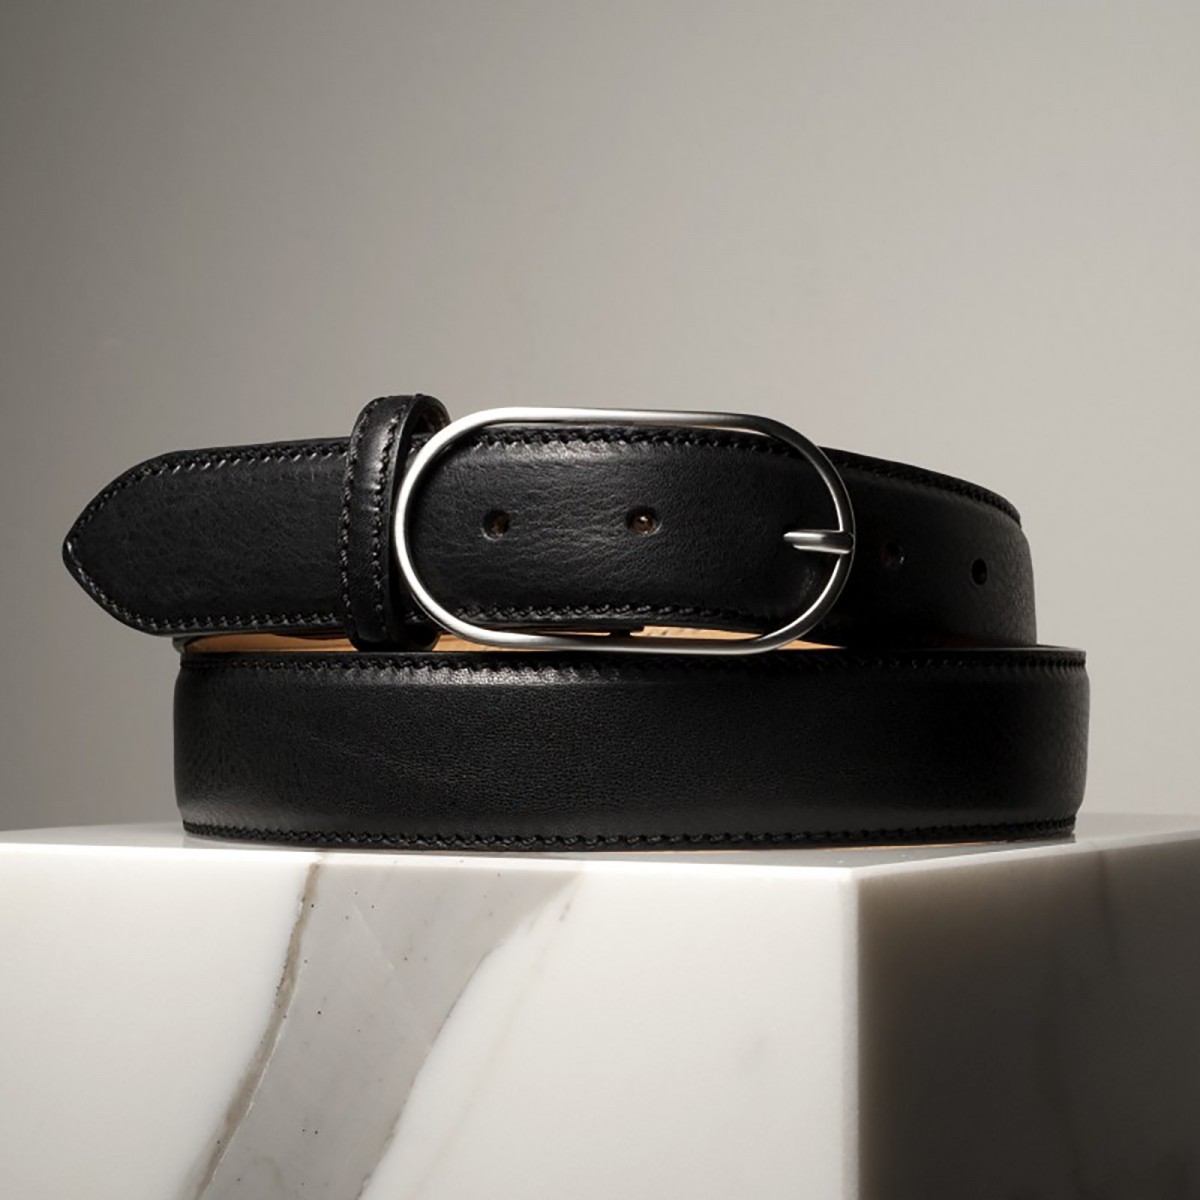 VOLANATO CALFSKIN - Leather belt, handmade in Italy